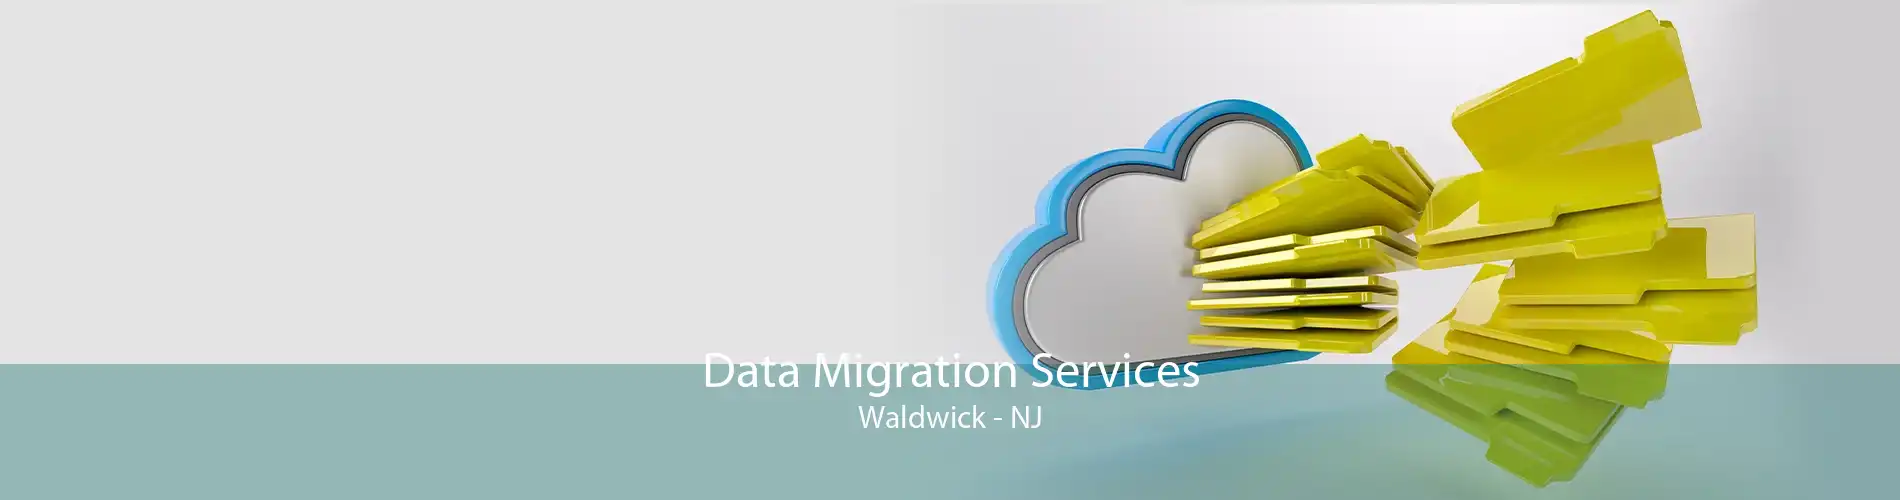 Data Migration Services Waldwick - NJ